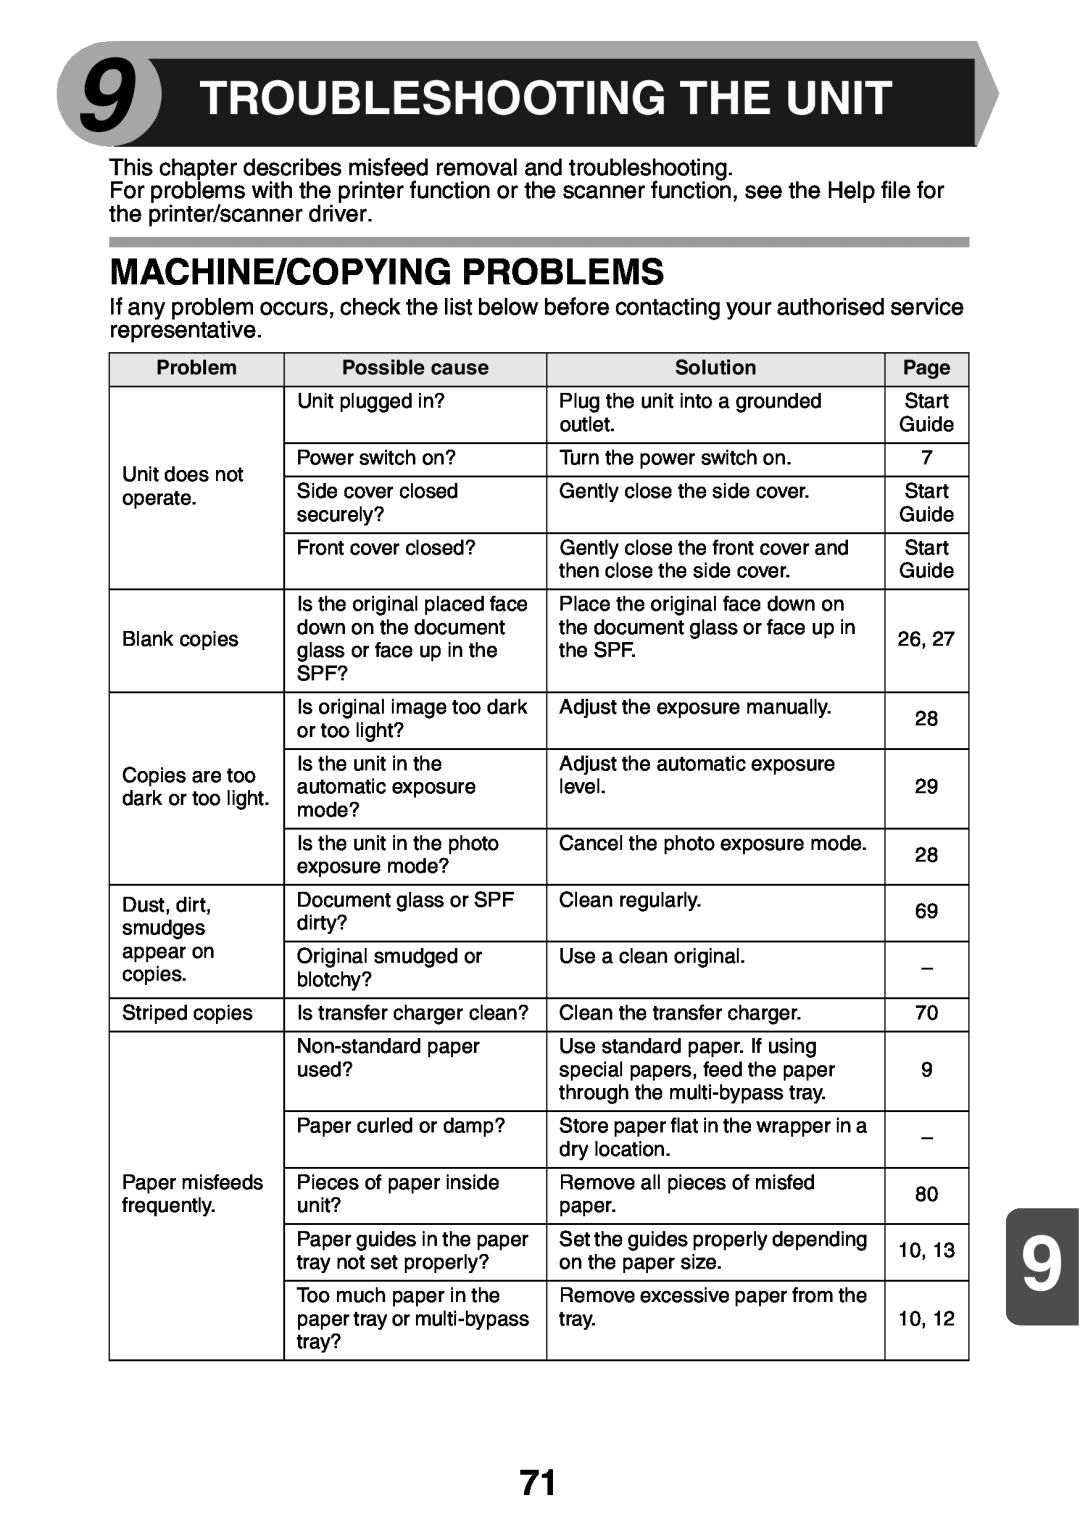 Sharp MX-B200 manual Troubleshooting The Unit, Machine/Copying Problems 